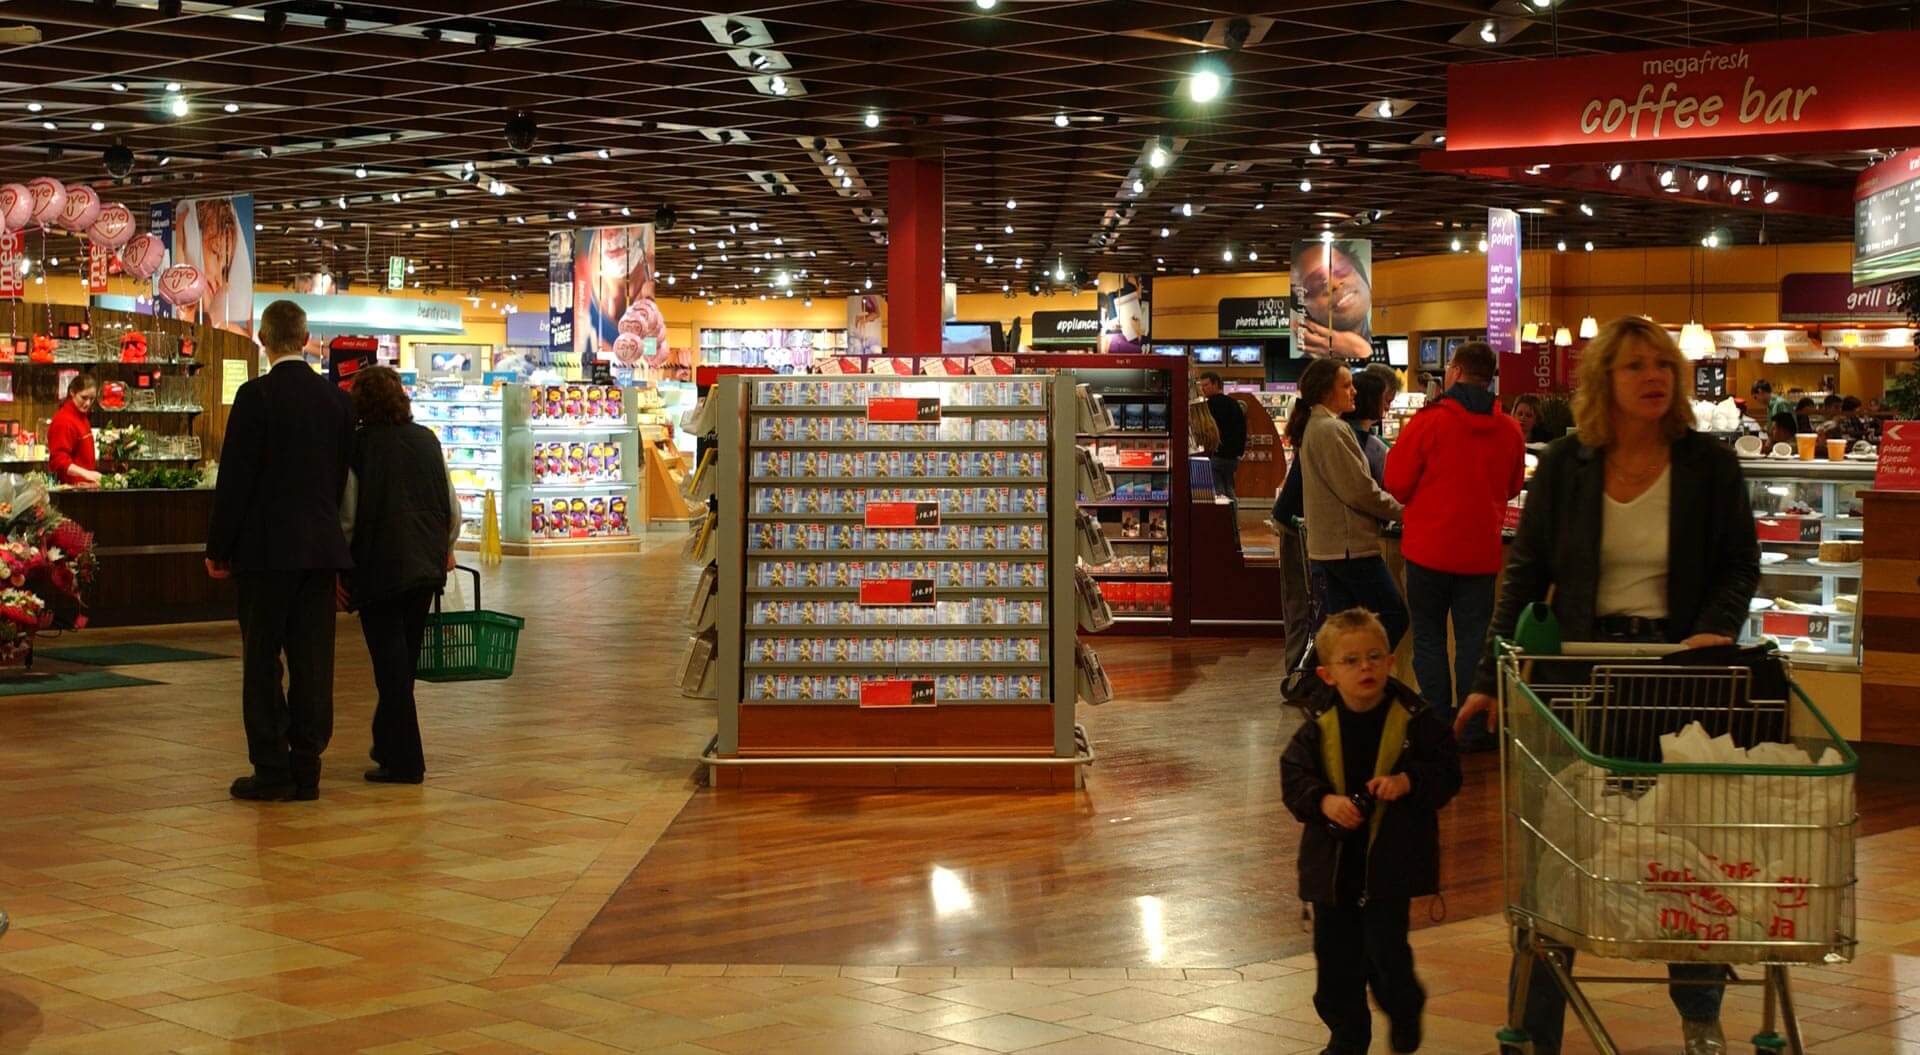  Safeway Mega store hypermarket entrance area with coffee bar